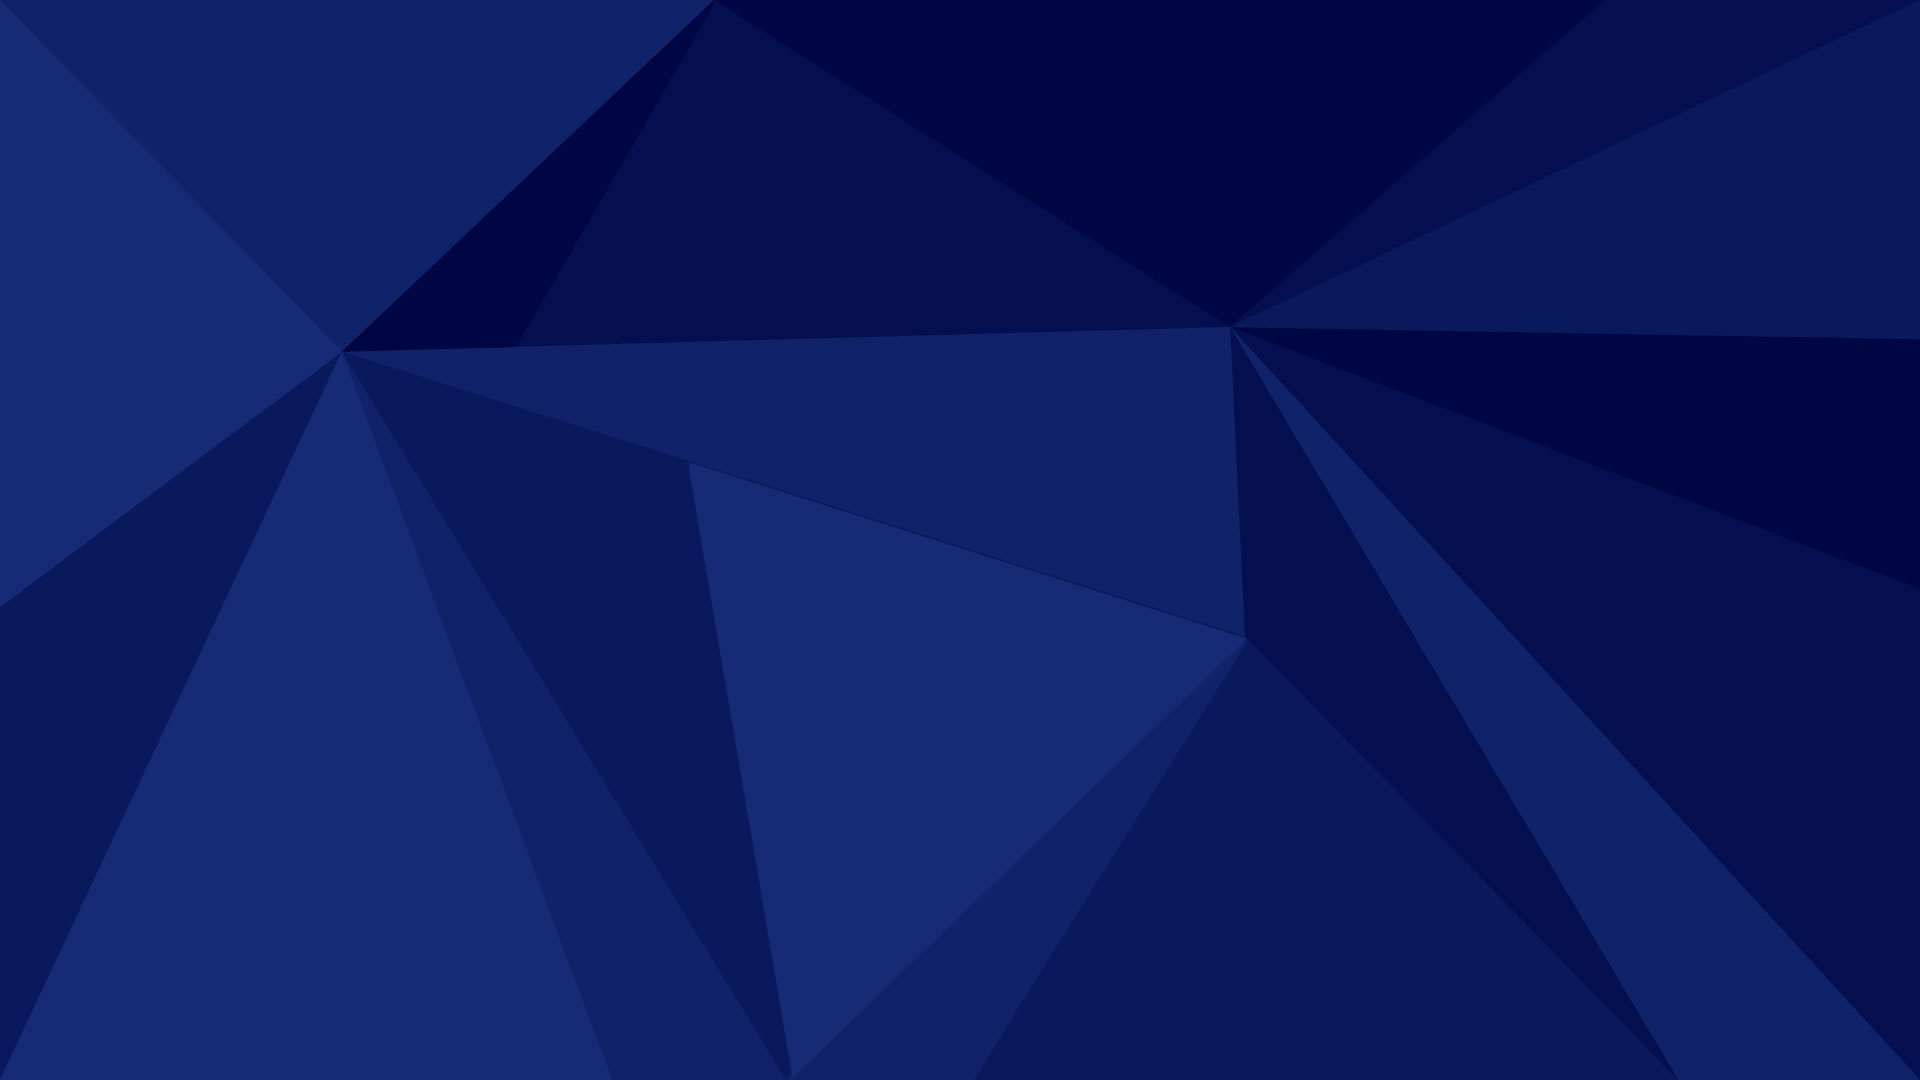 Blue 3d Background Vector Images